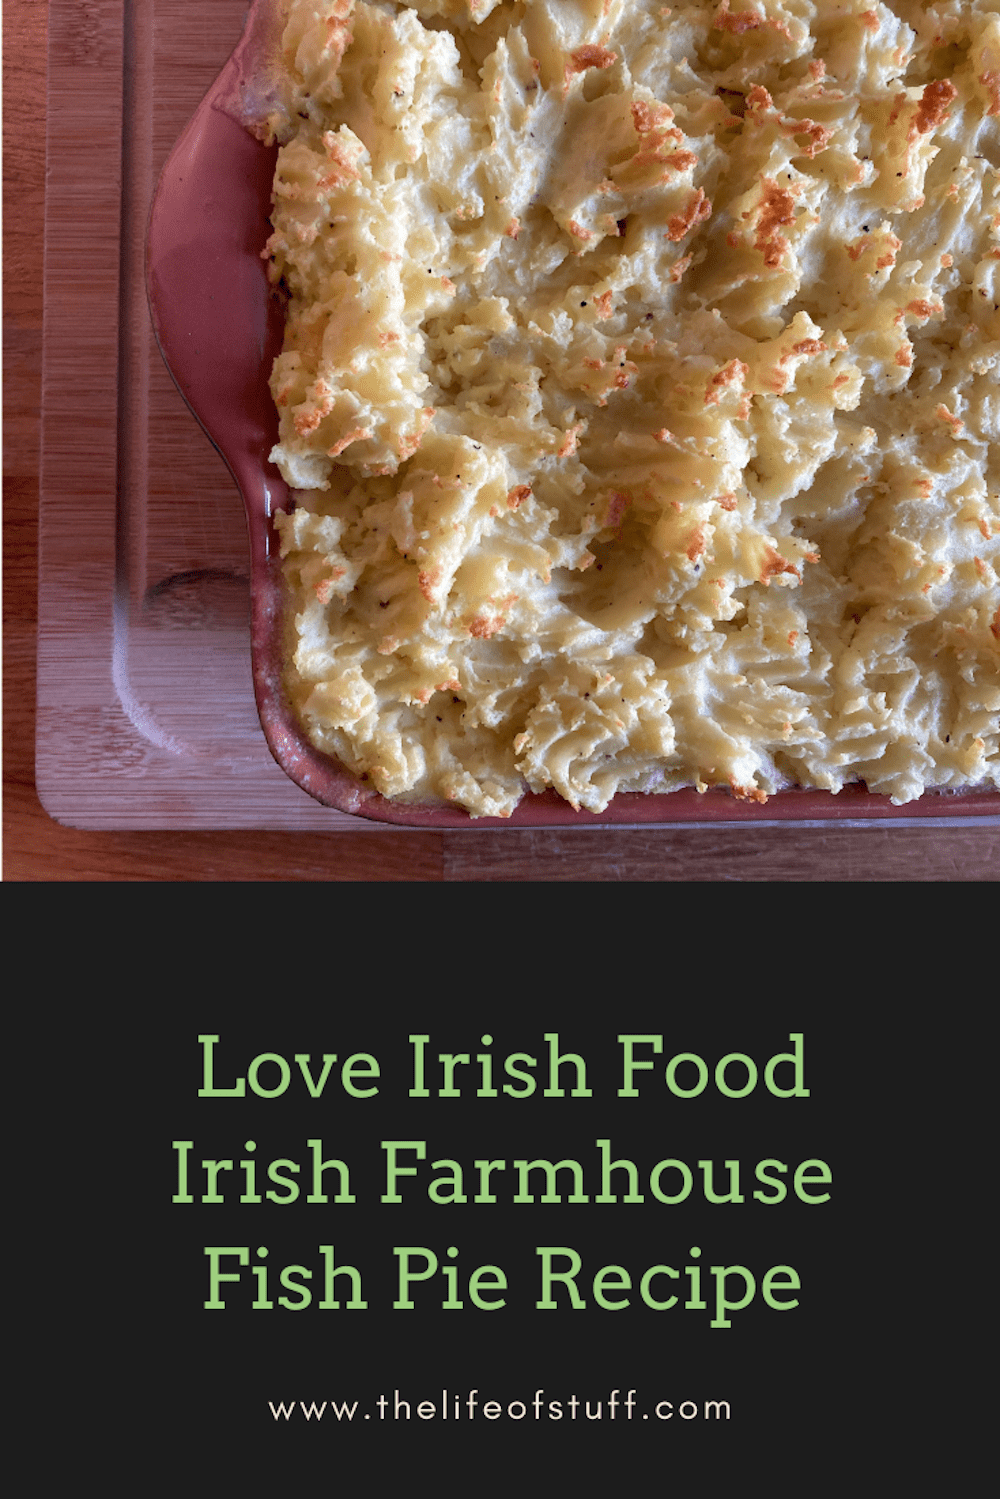 Love Irish Food Recipe - Irish Farmhouse Fish Pie - The Life of Stuff.com